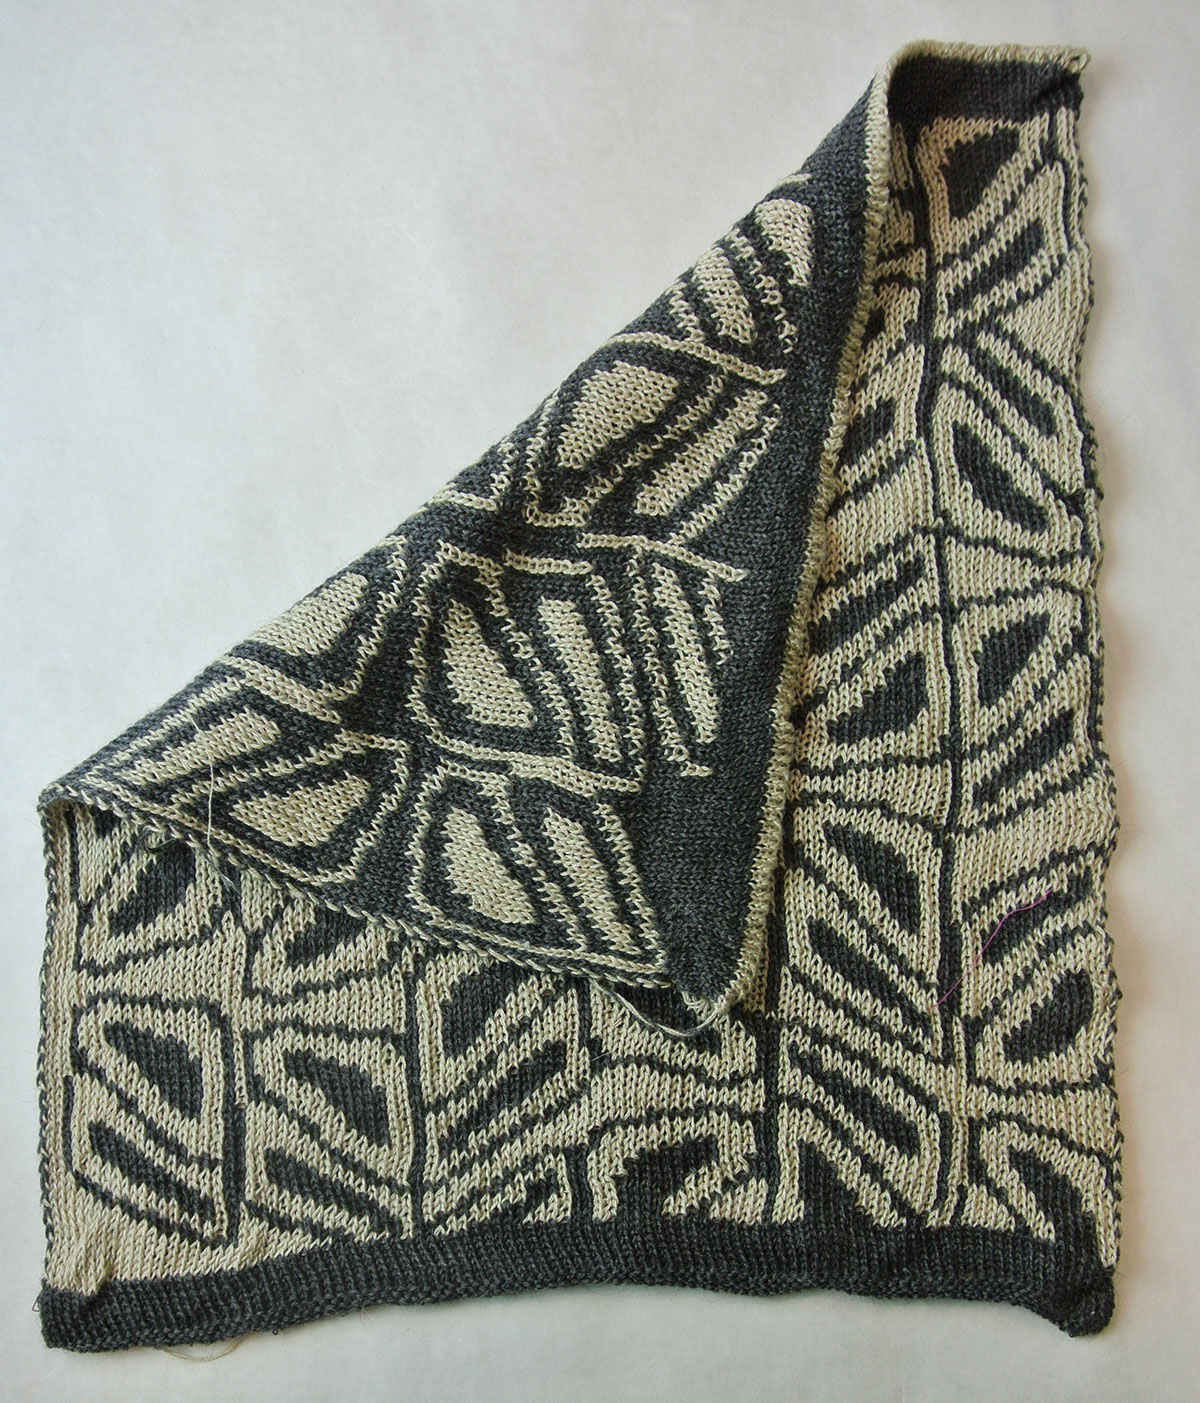 knitting machine knitting shima seiki moths jacquard pointelle Textiles fabric knitwear wings butterfly wing moth wing pattern knit design